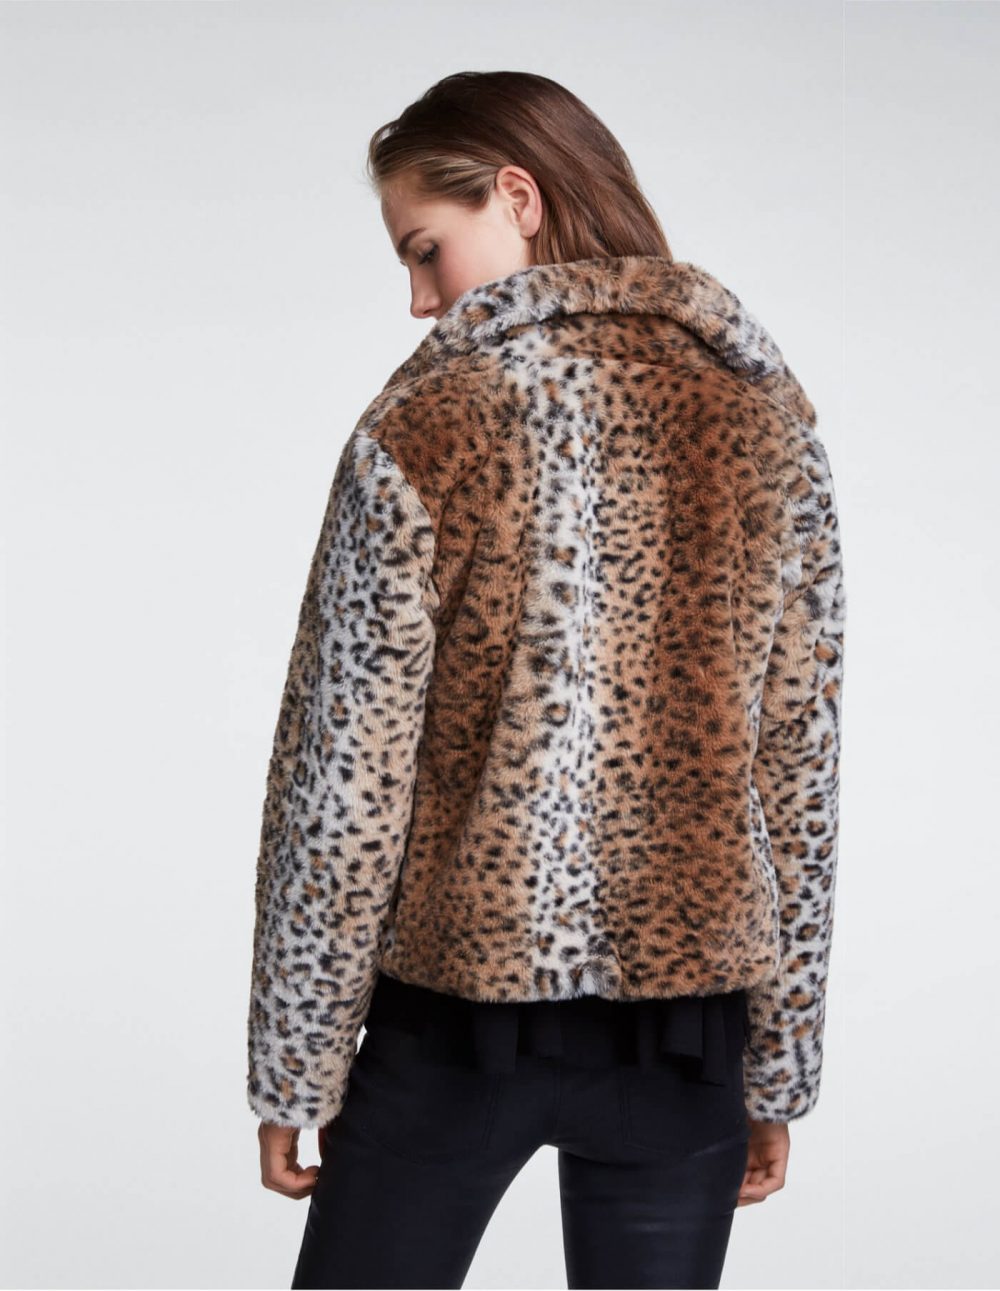 Set Leopard Jacket In Leopard Print at Storm Fashion